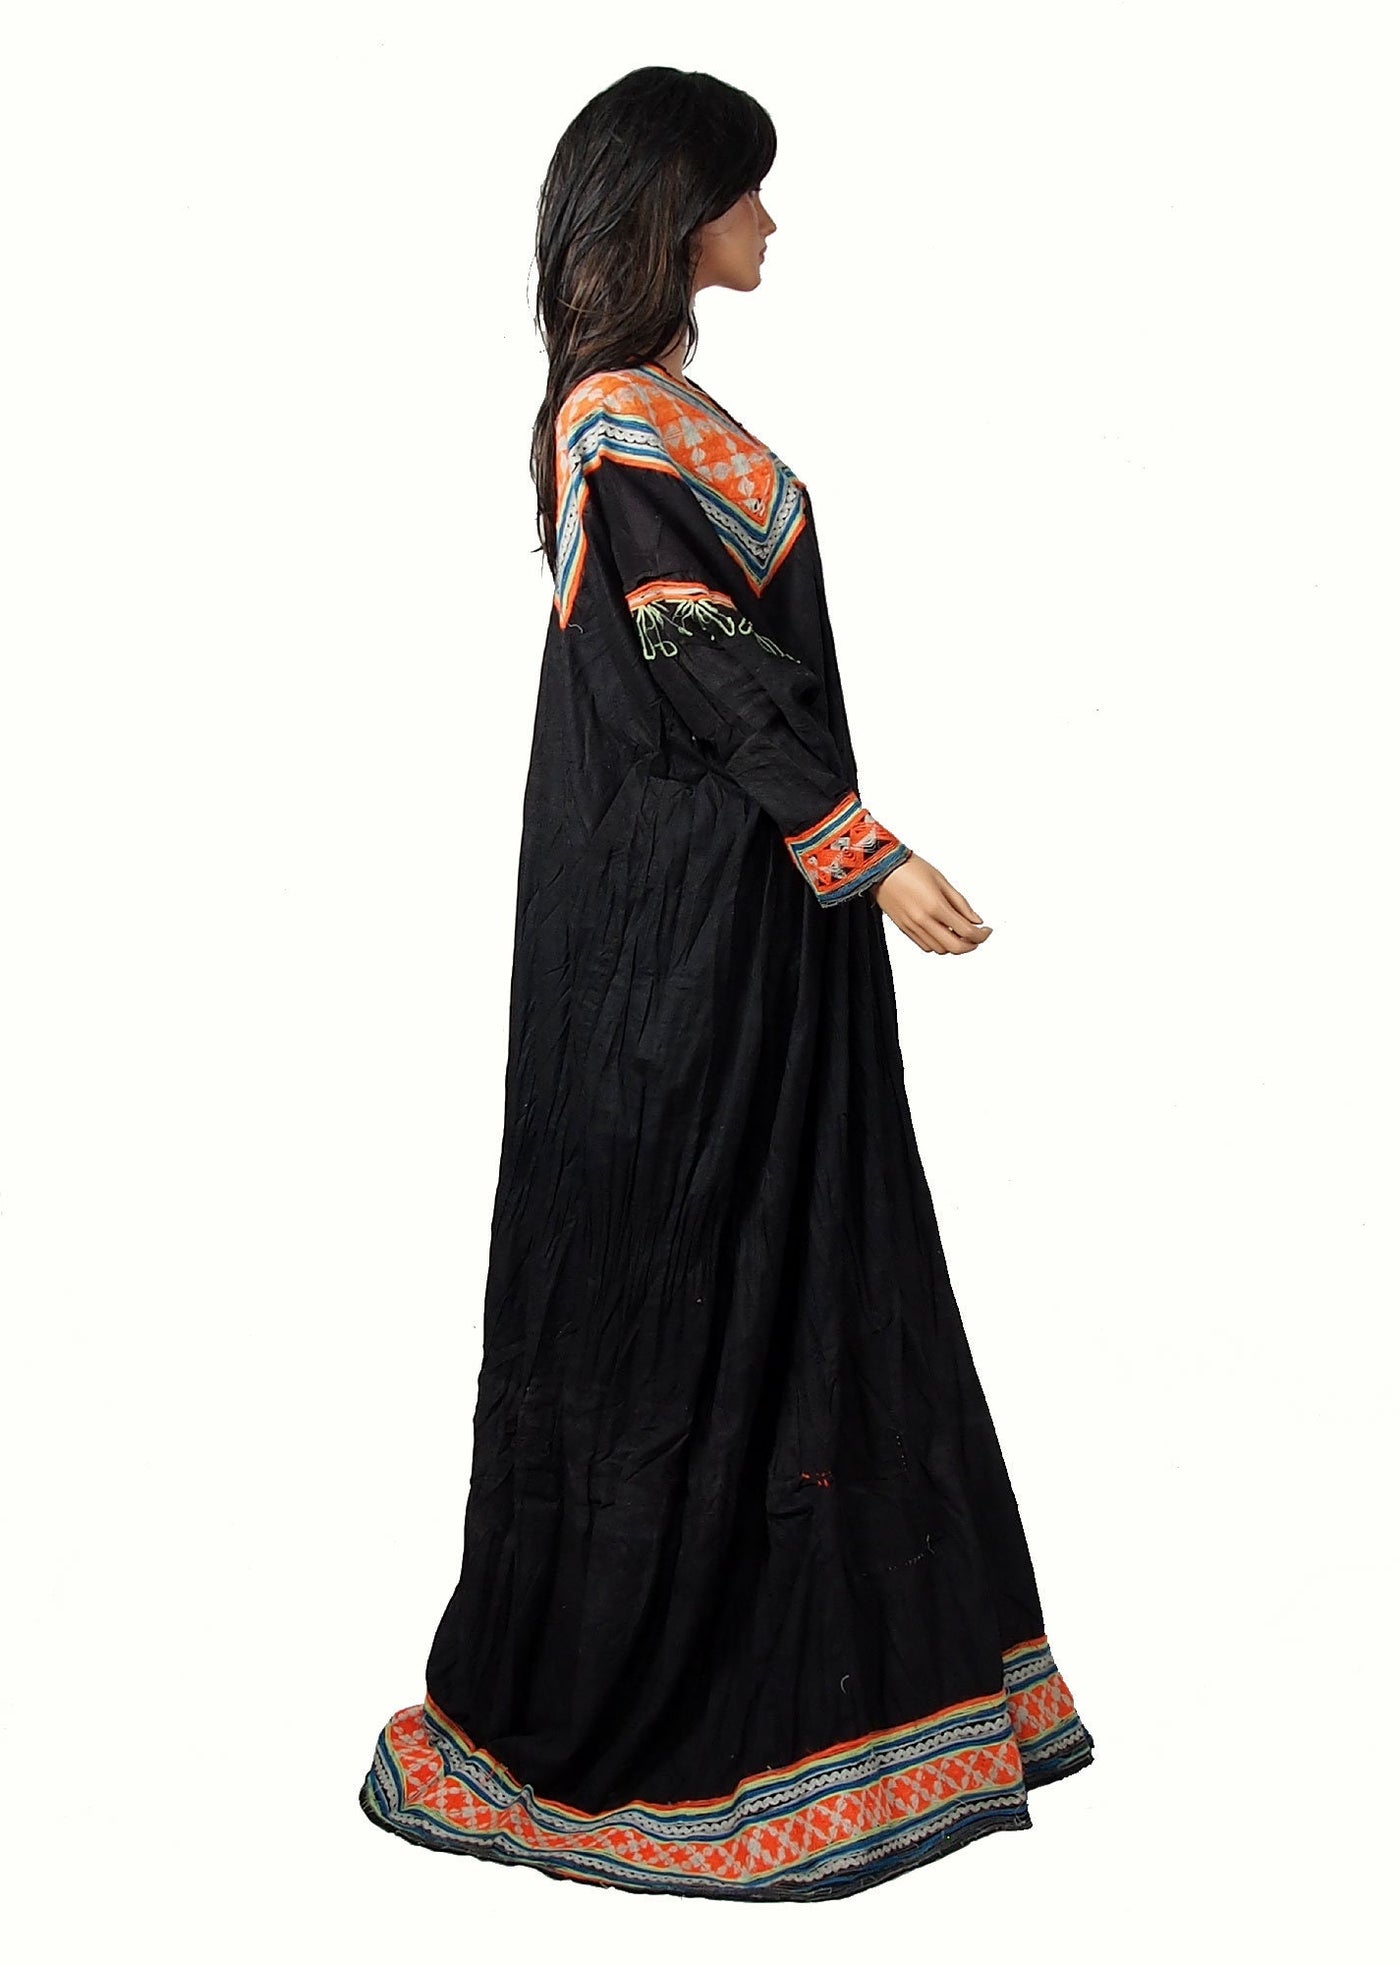 antik Frauen kleid Chitral Kalash kohistan Hindukush Pakistan Nr:4  Orientsbazar   